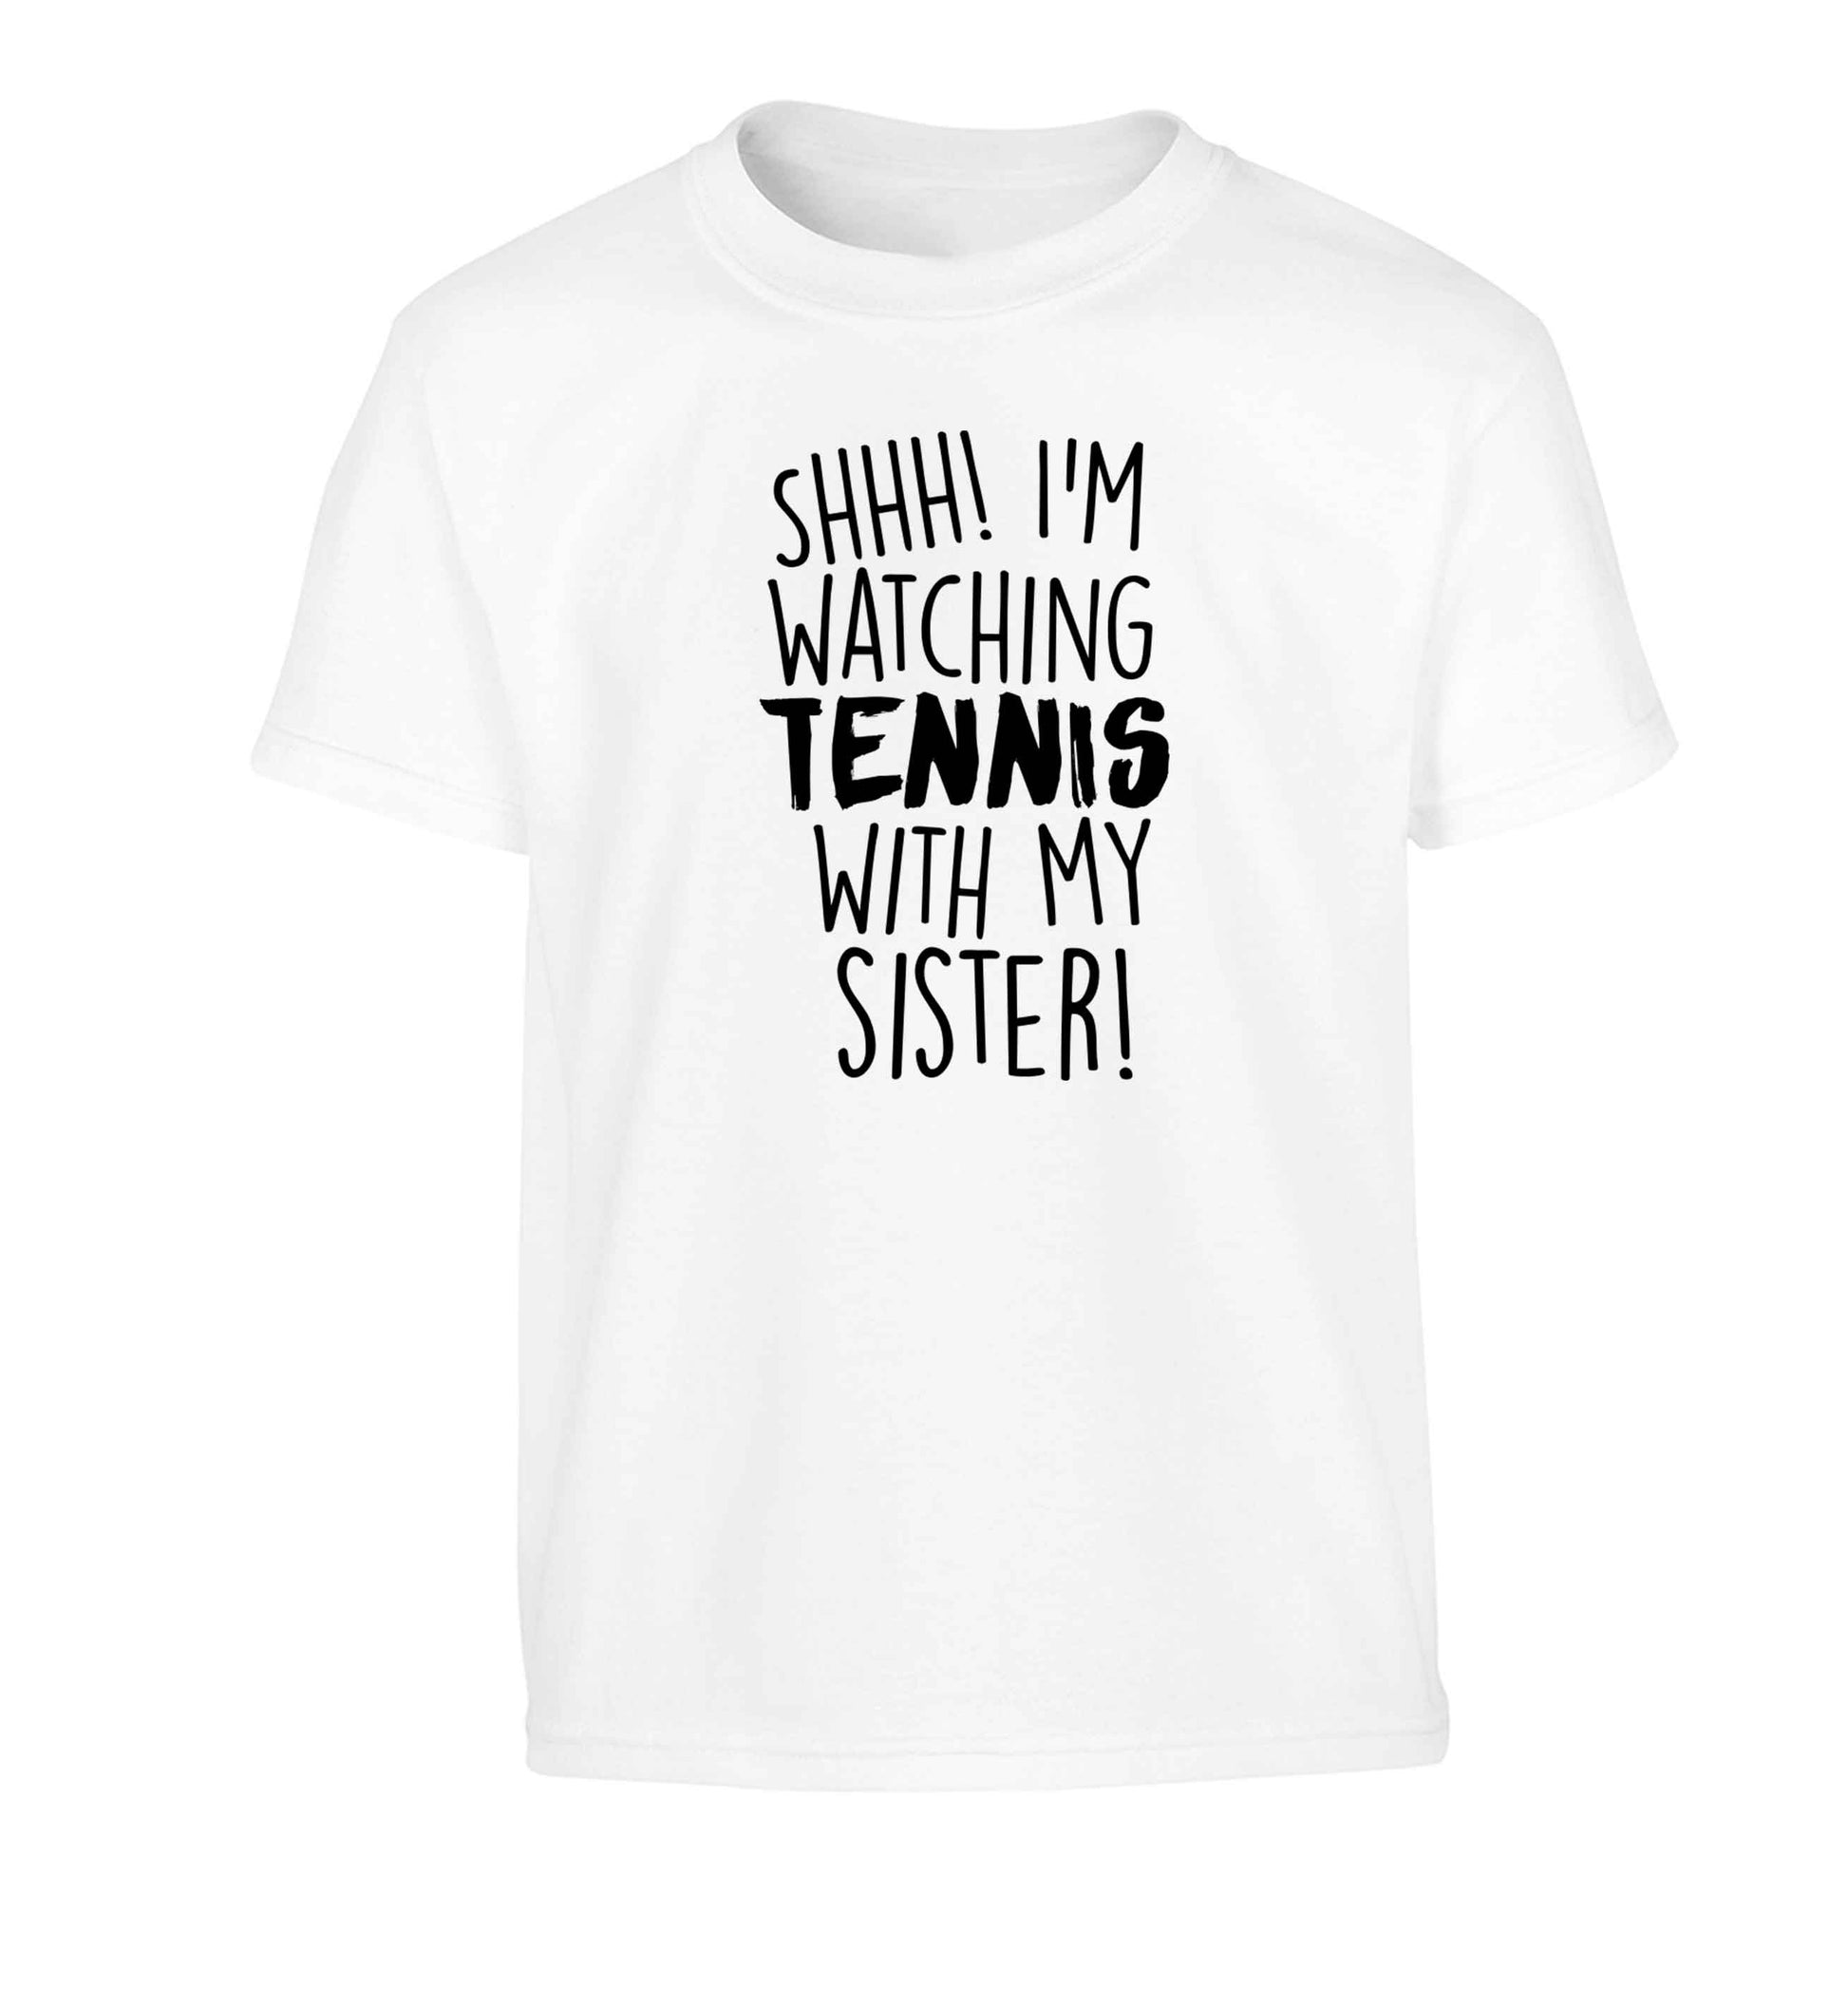 Shh! I'm watching tennis with my sister! Children's white Tshirt 12-13 Years